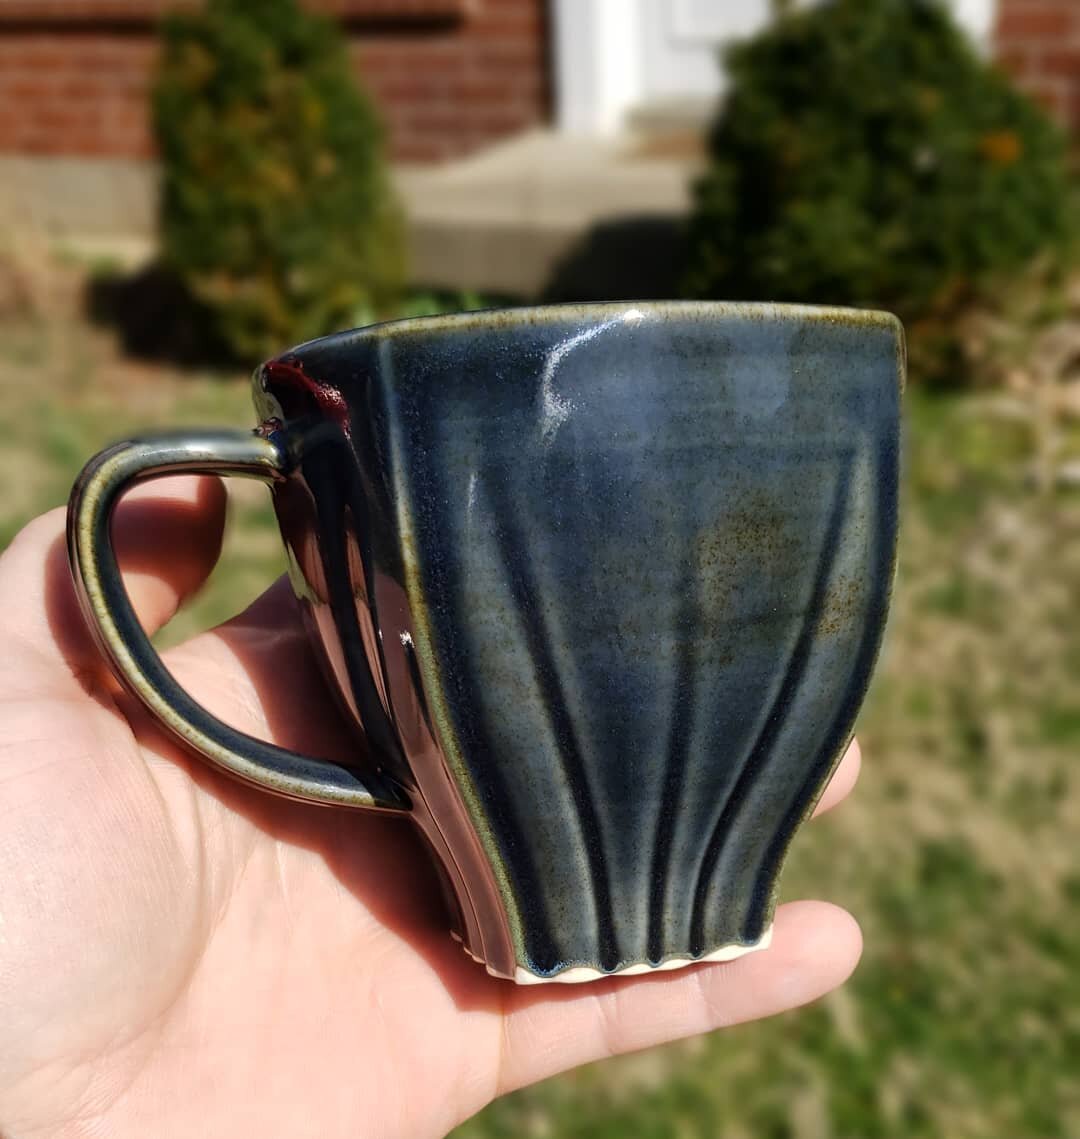 Fresh from the kiln.

#slipcasting #ceramics #3dprinting #moldmaking #pottery #potteryofinstagram #coffeecup #coffeemug